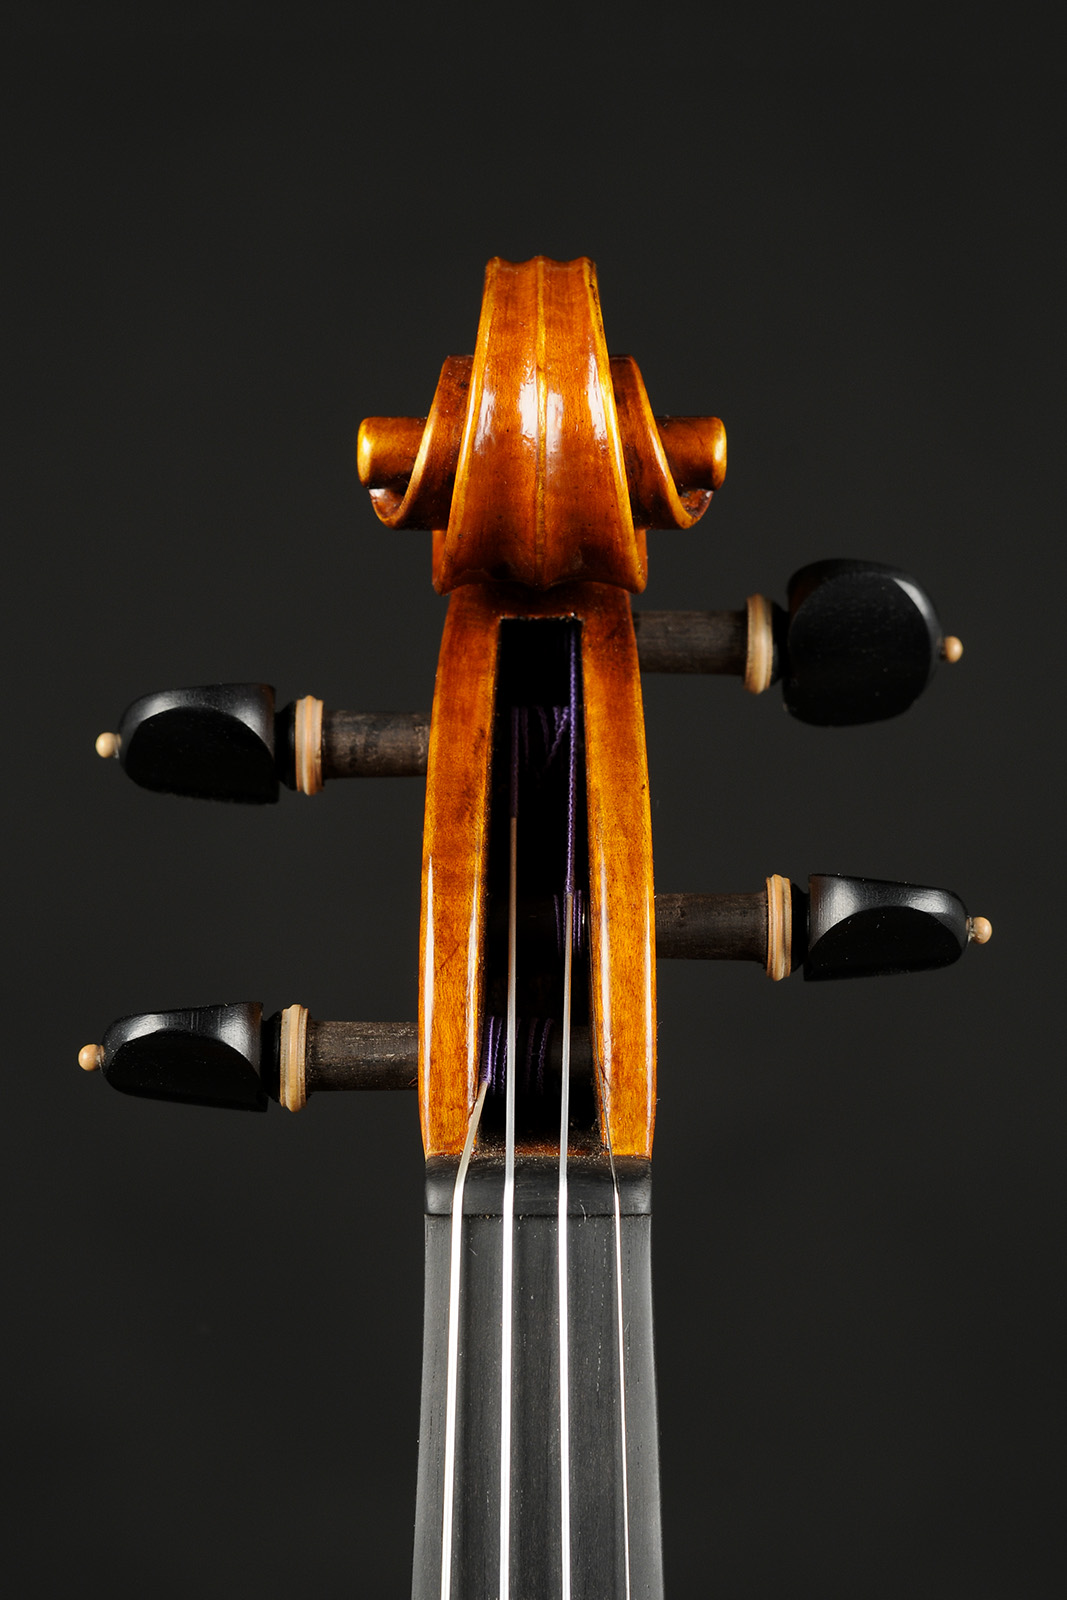 Antonio Stradivari Cremona 1717 “San Clemente“ - Image 7